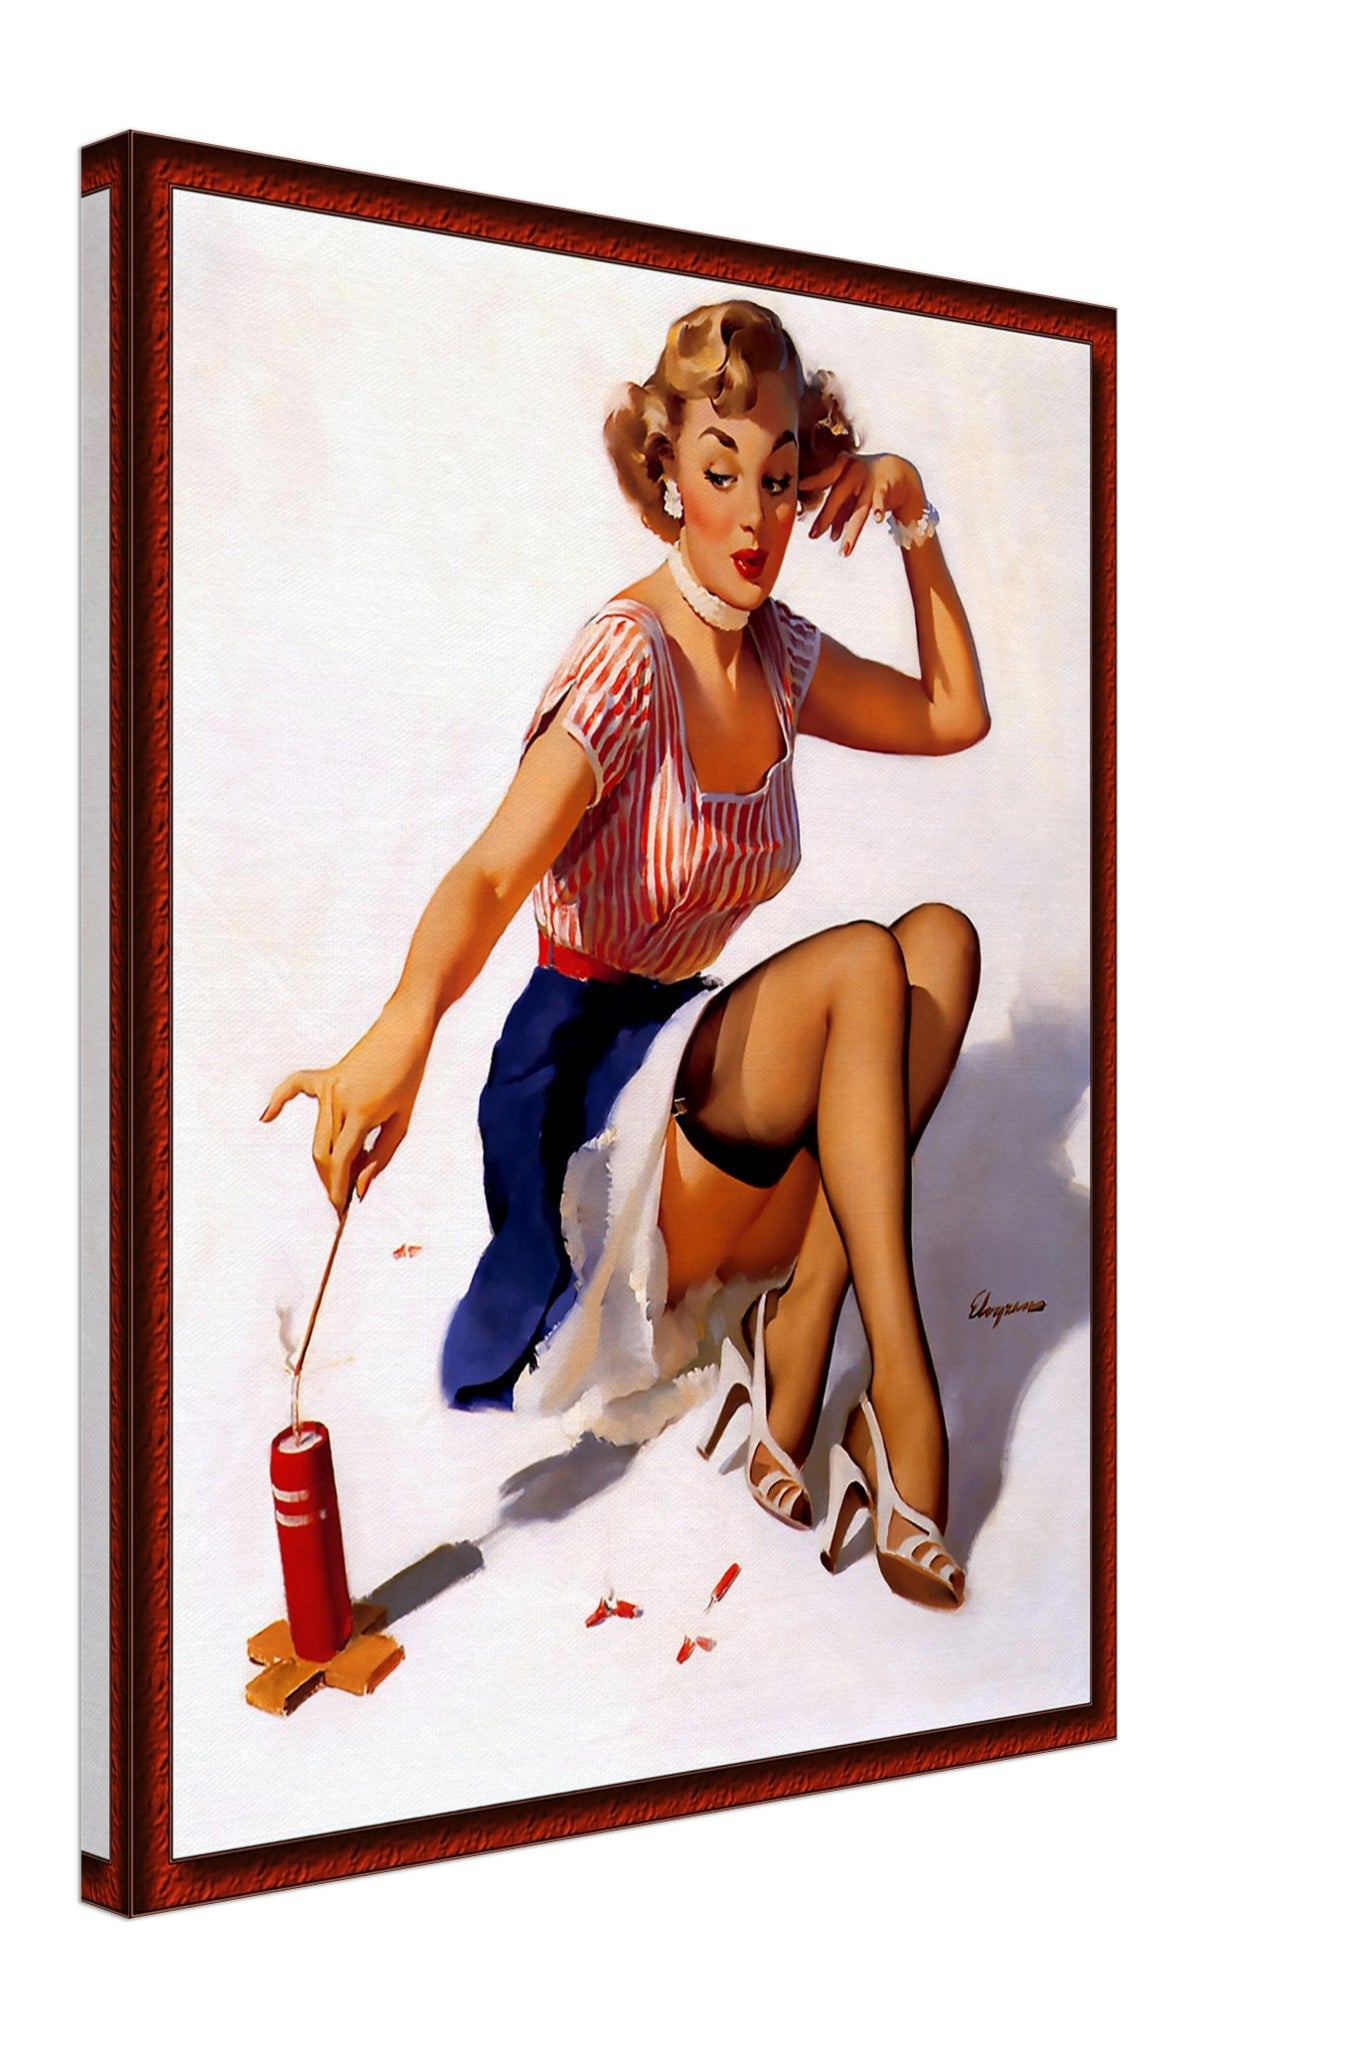 Vintage Pin Up Girl Canvas, Gil Elvgren, Looking For Trouble - Vintage Art - Retro Pin Up Girl Canvas Print - Late 1940'S - 1950'S - WallArtPrints4U